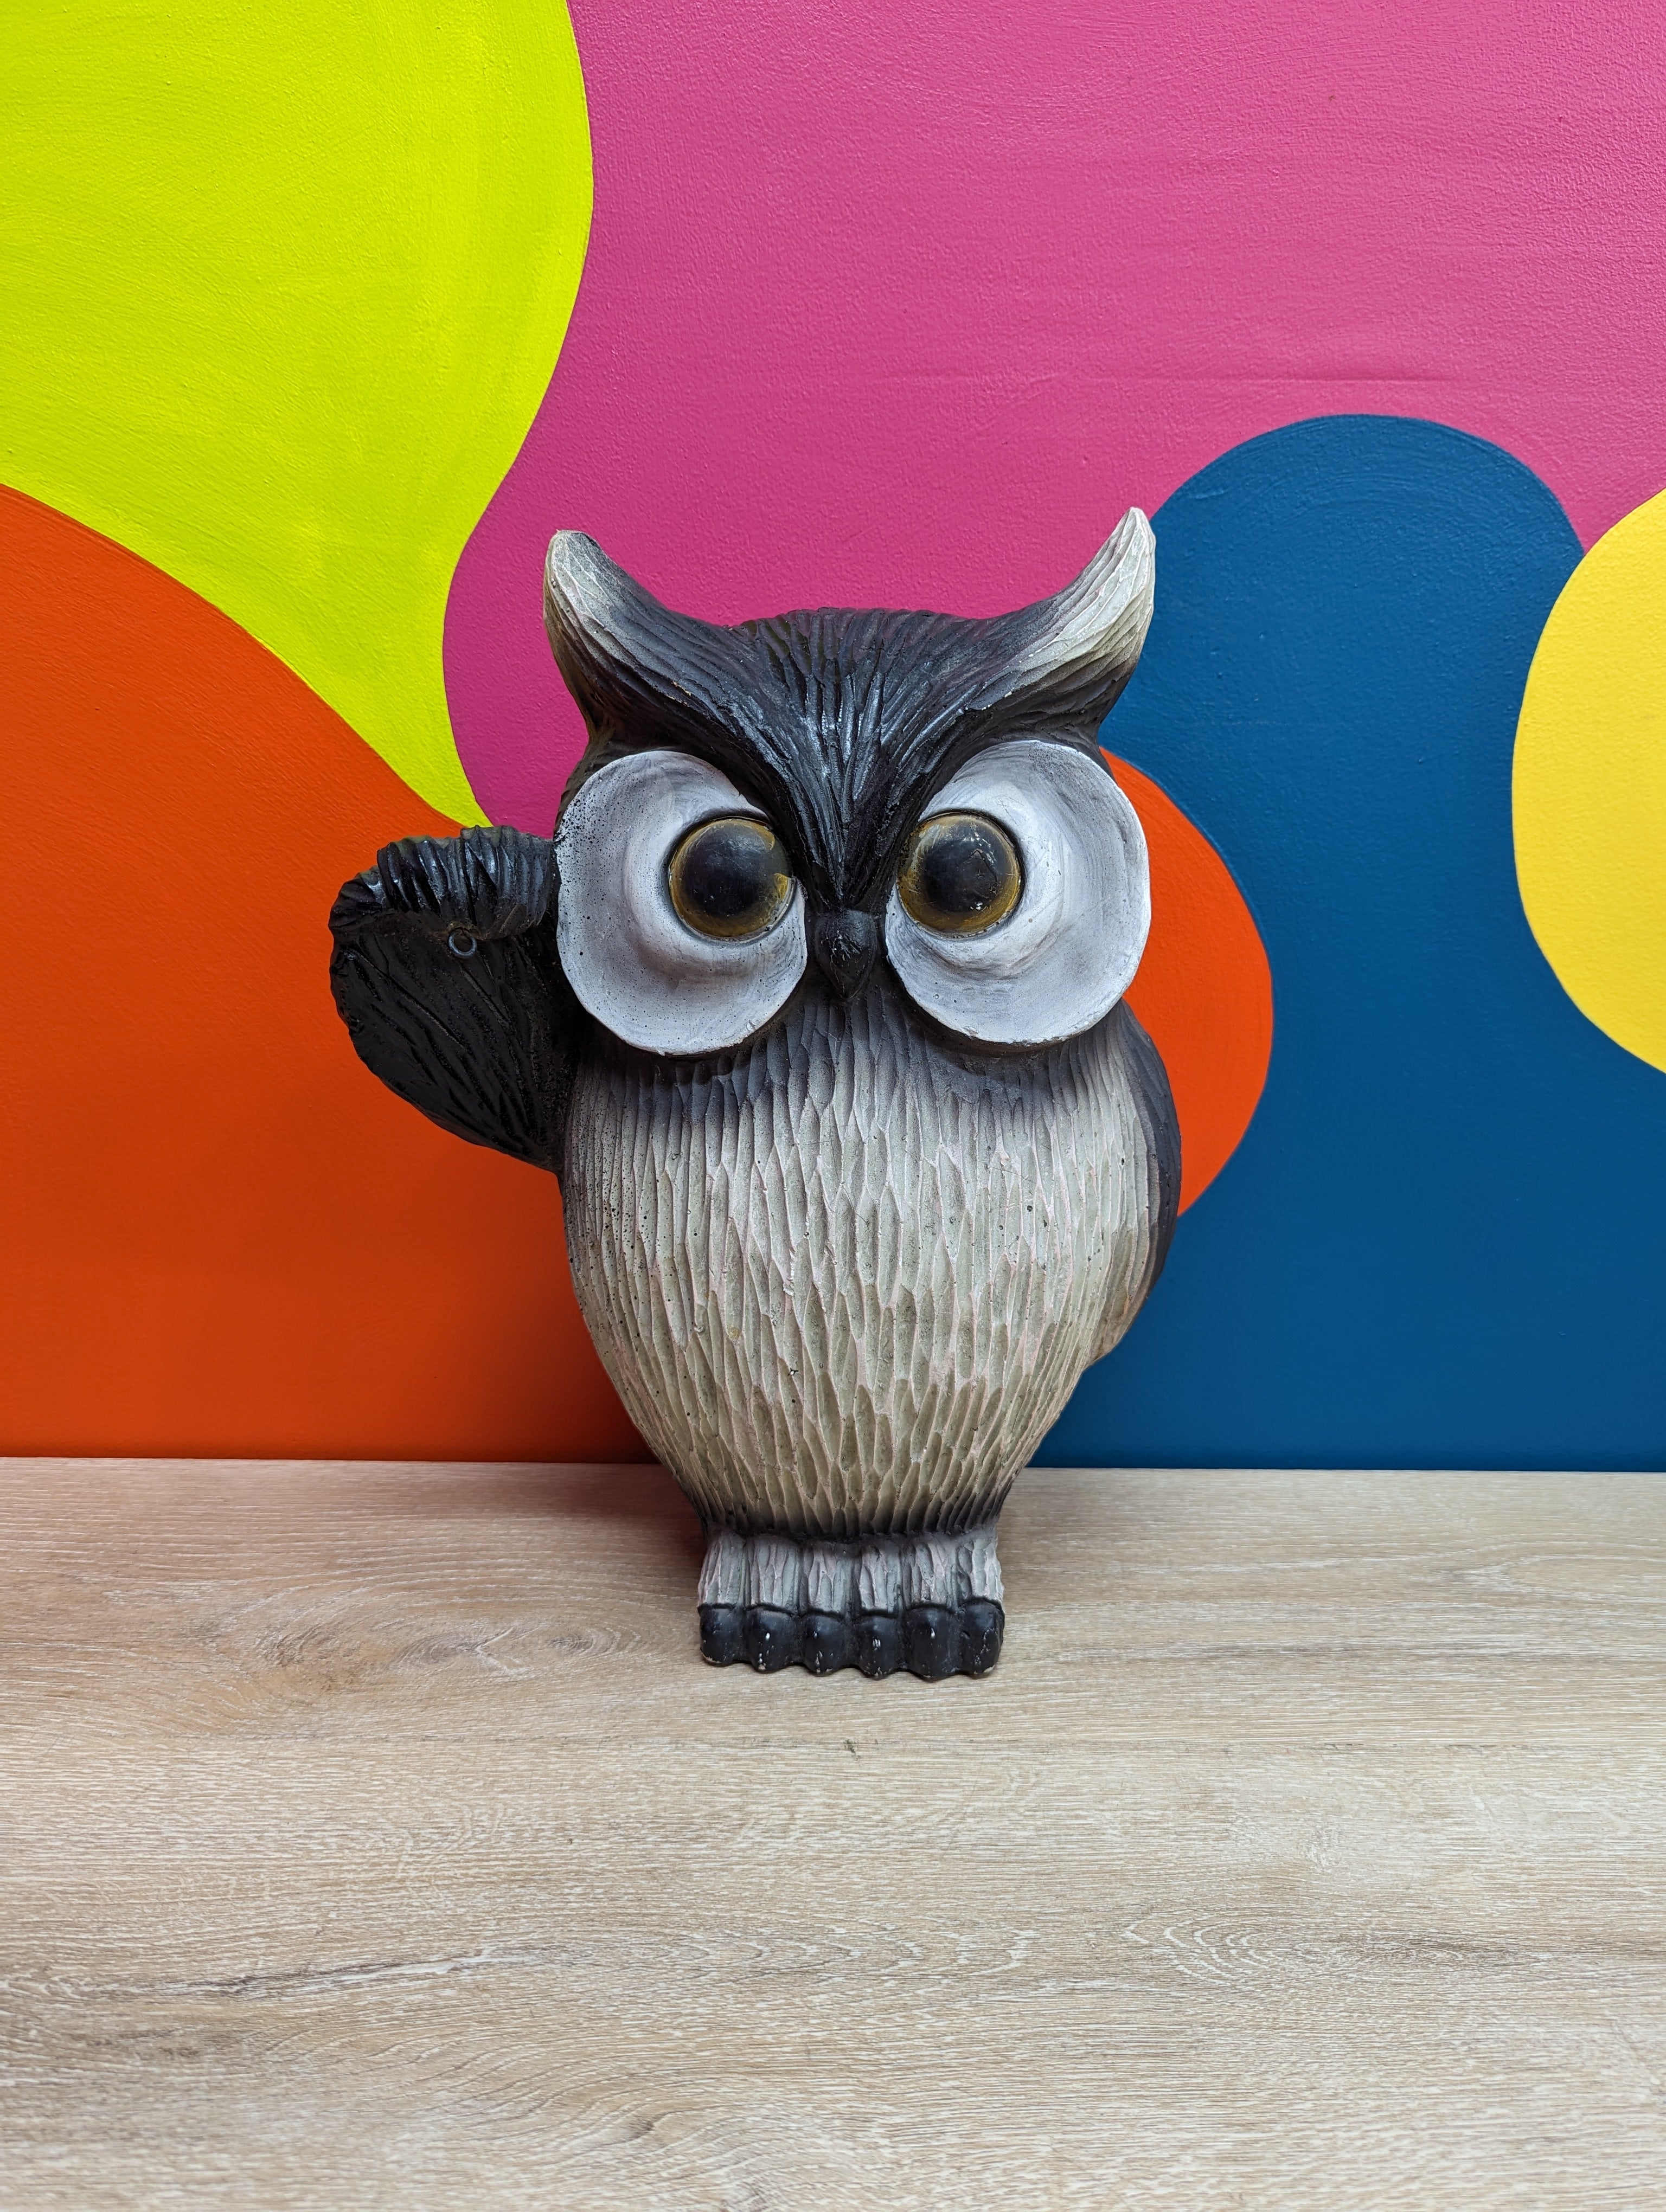 Decorative Owl Figurine